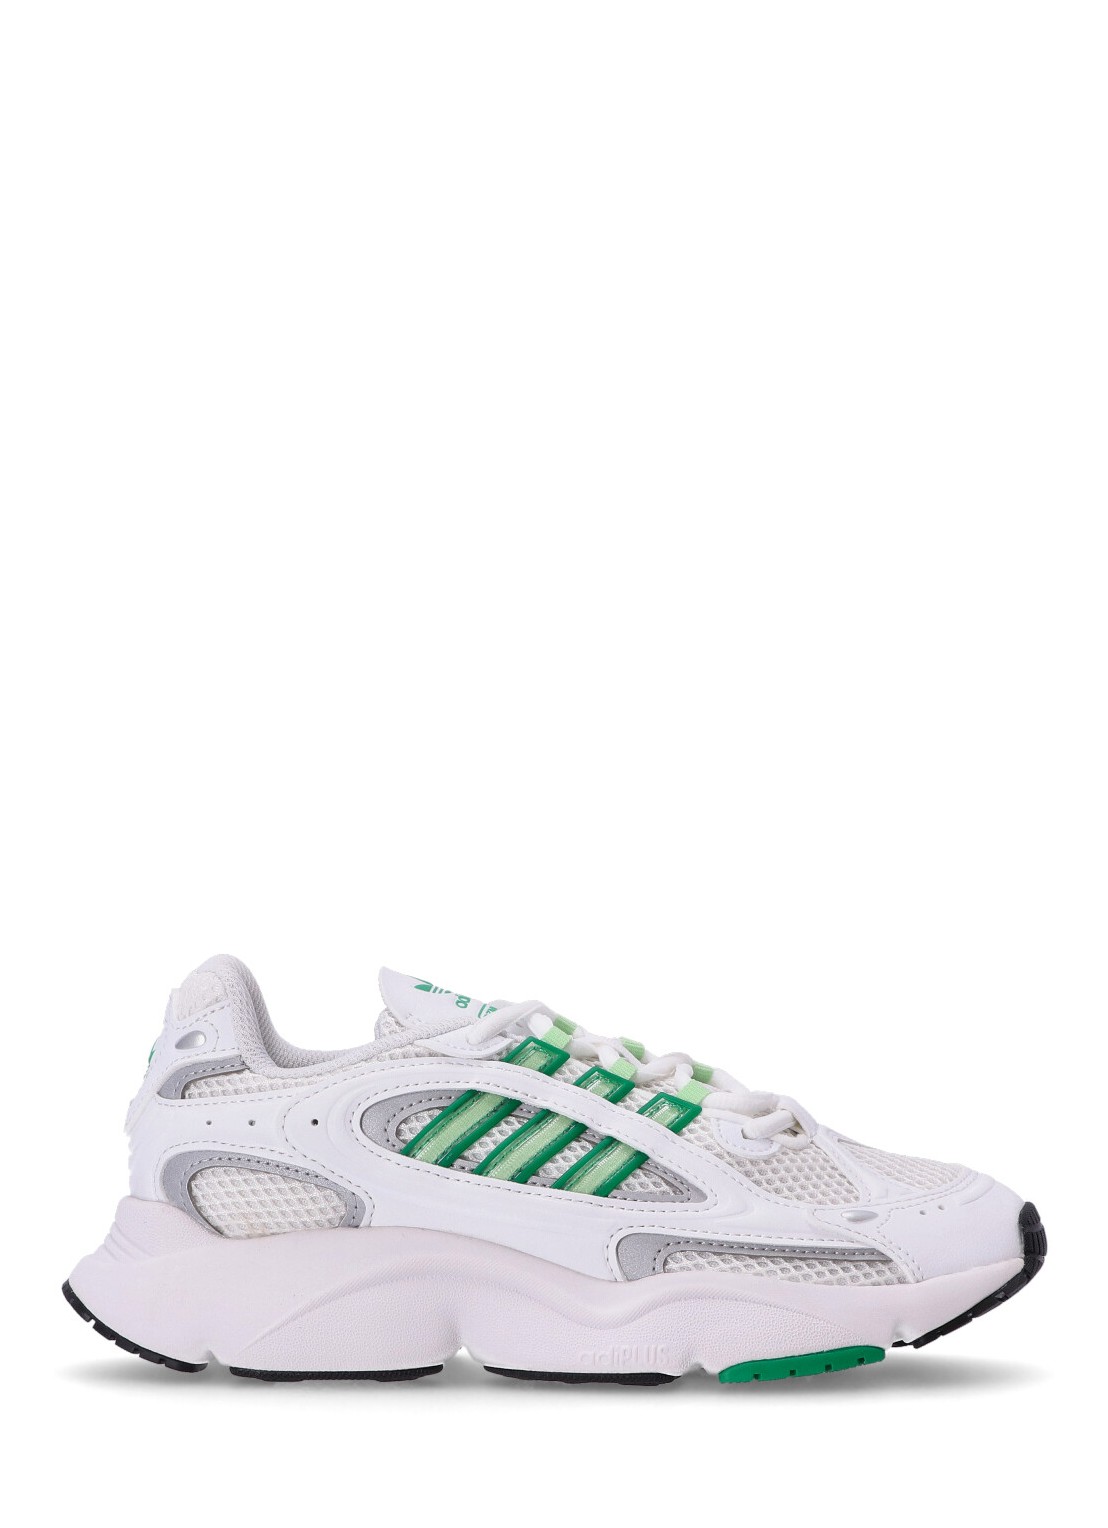 Sneaker adidas originals sneaker woman ozmillen w id8346 ftwwht segrsp green talla blanco
 